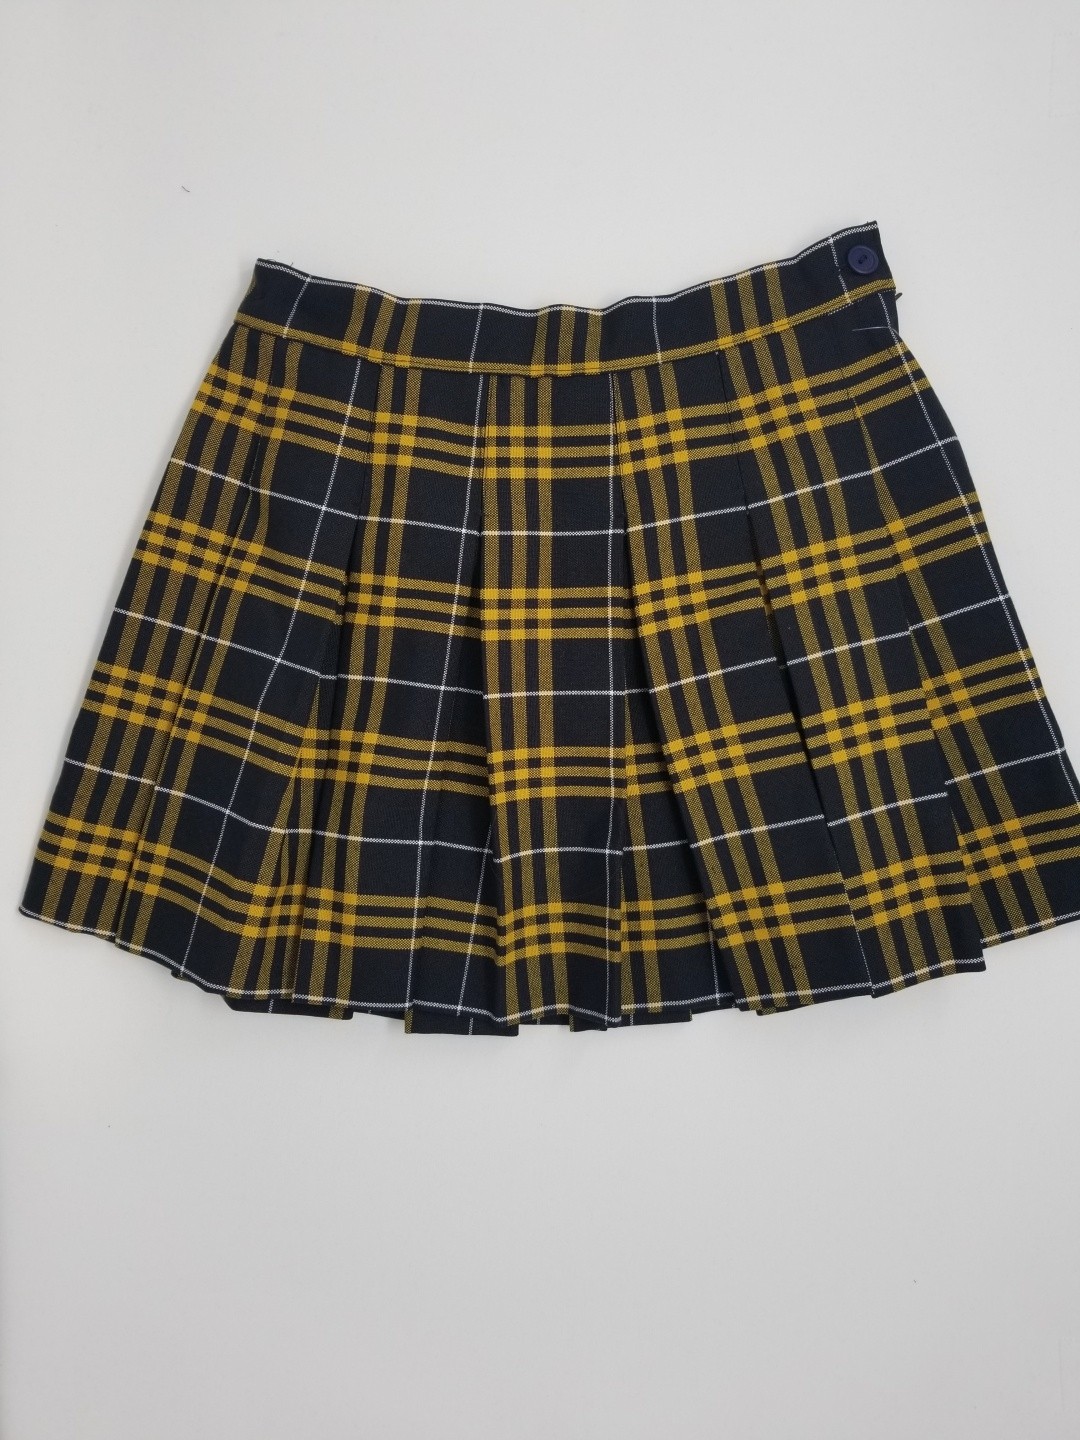 Stitch Down Pleat Skirt- Style 11-Plaid 12